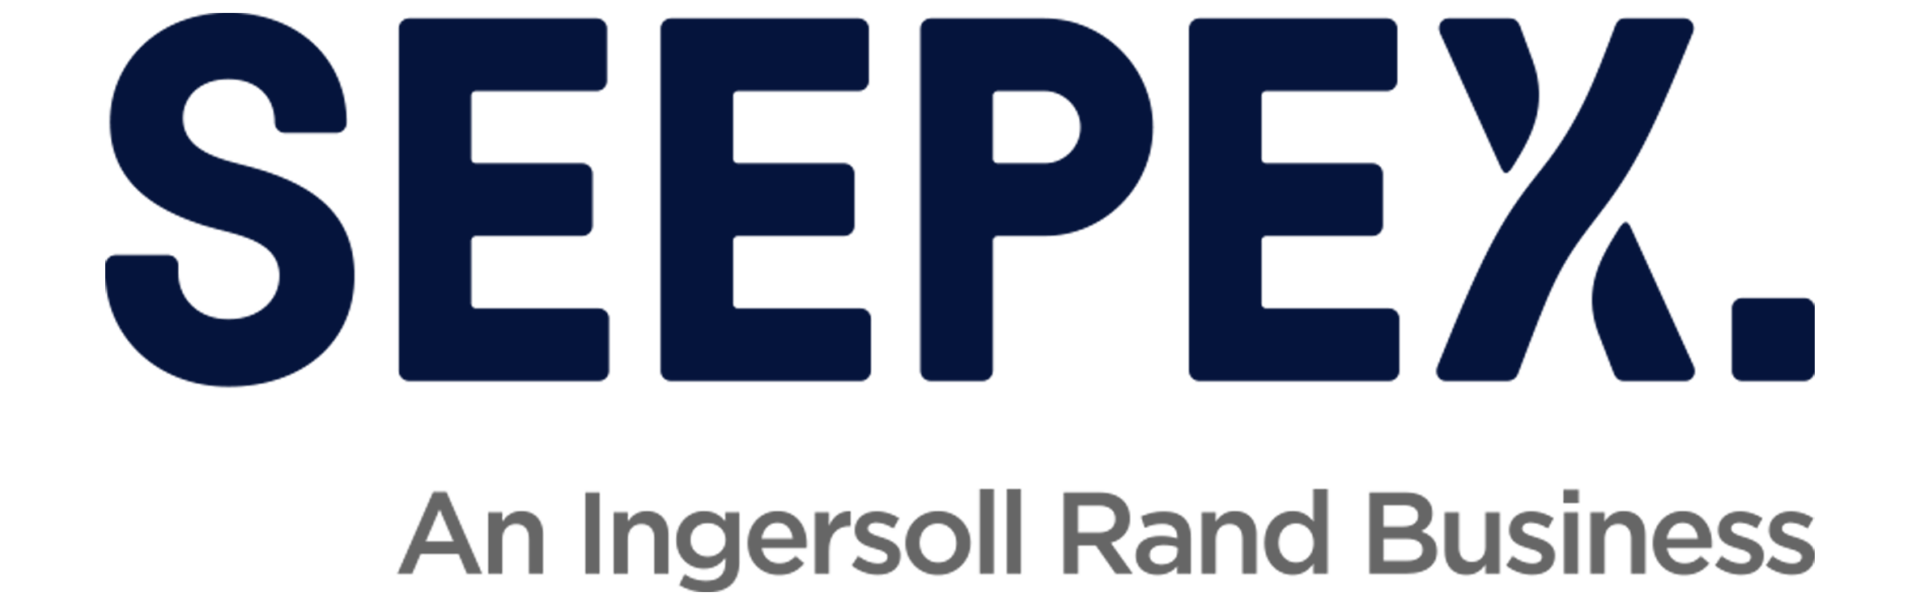 logo-item Seepex